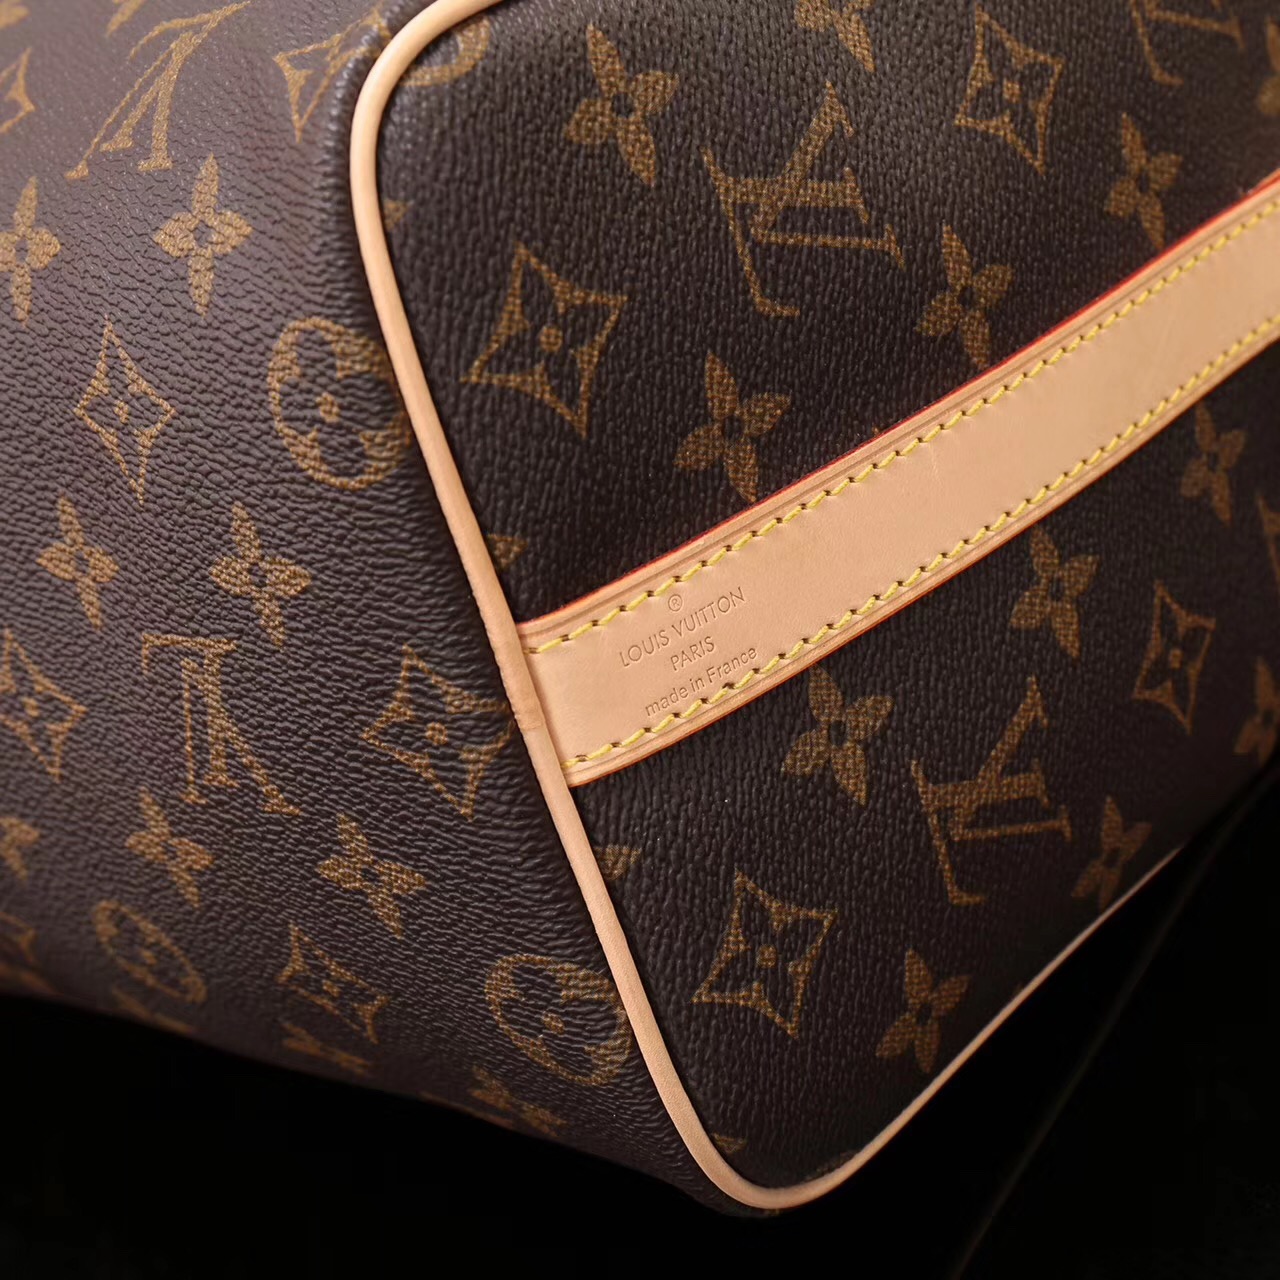 LV Louis Vuitton Speedy 25 Monogram bags M41113 Handbags Brown